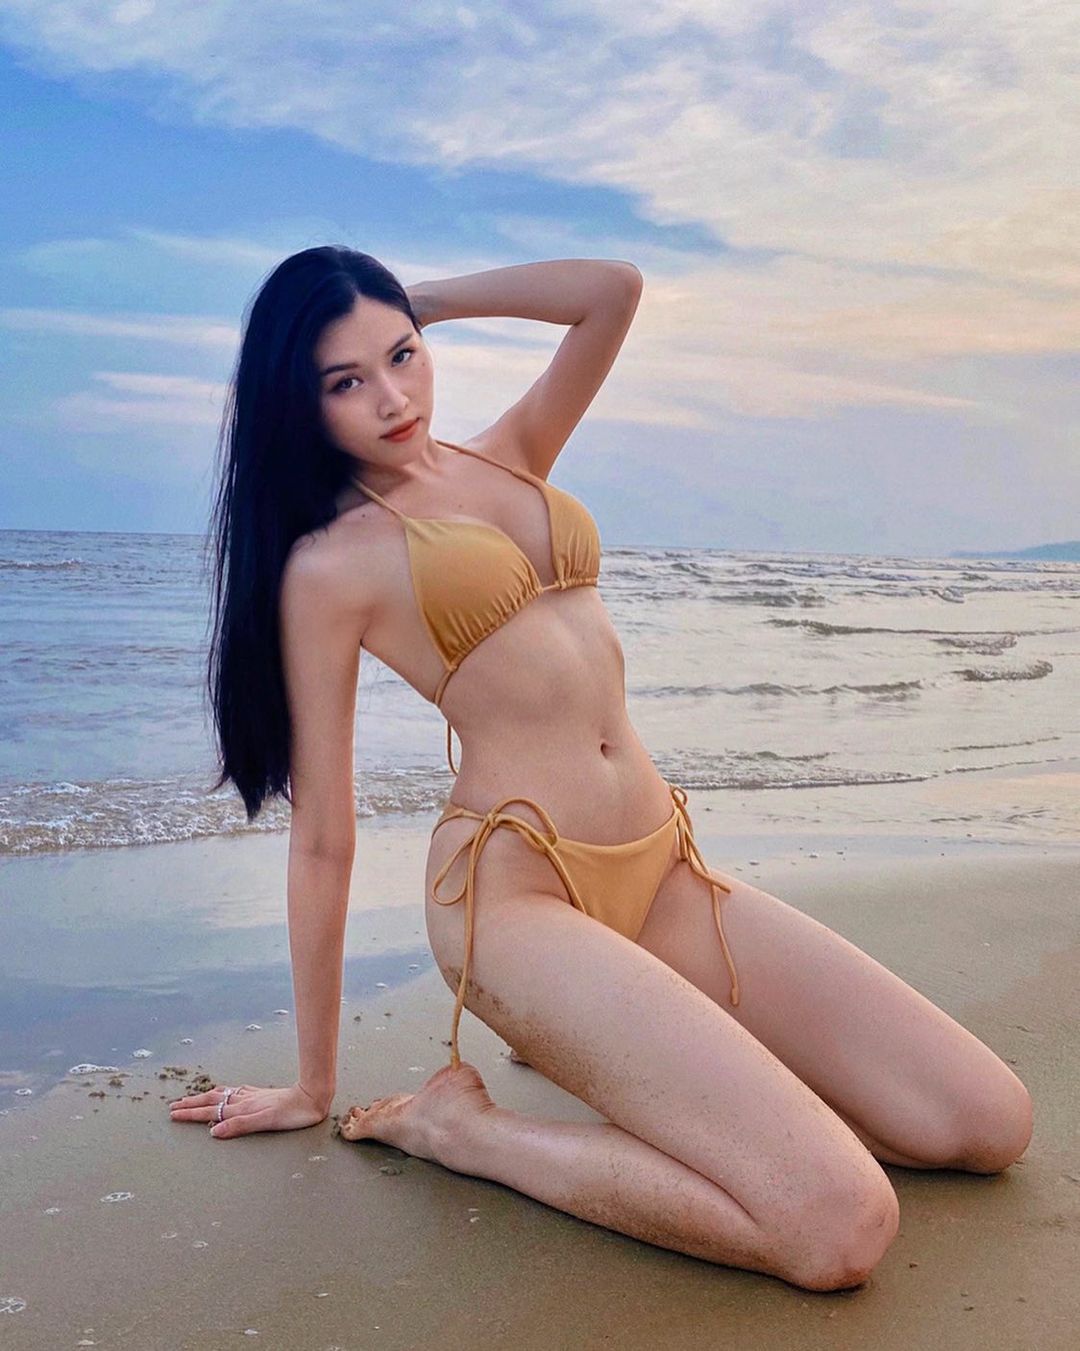 Thanh huyền bikini trên bãi biển